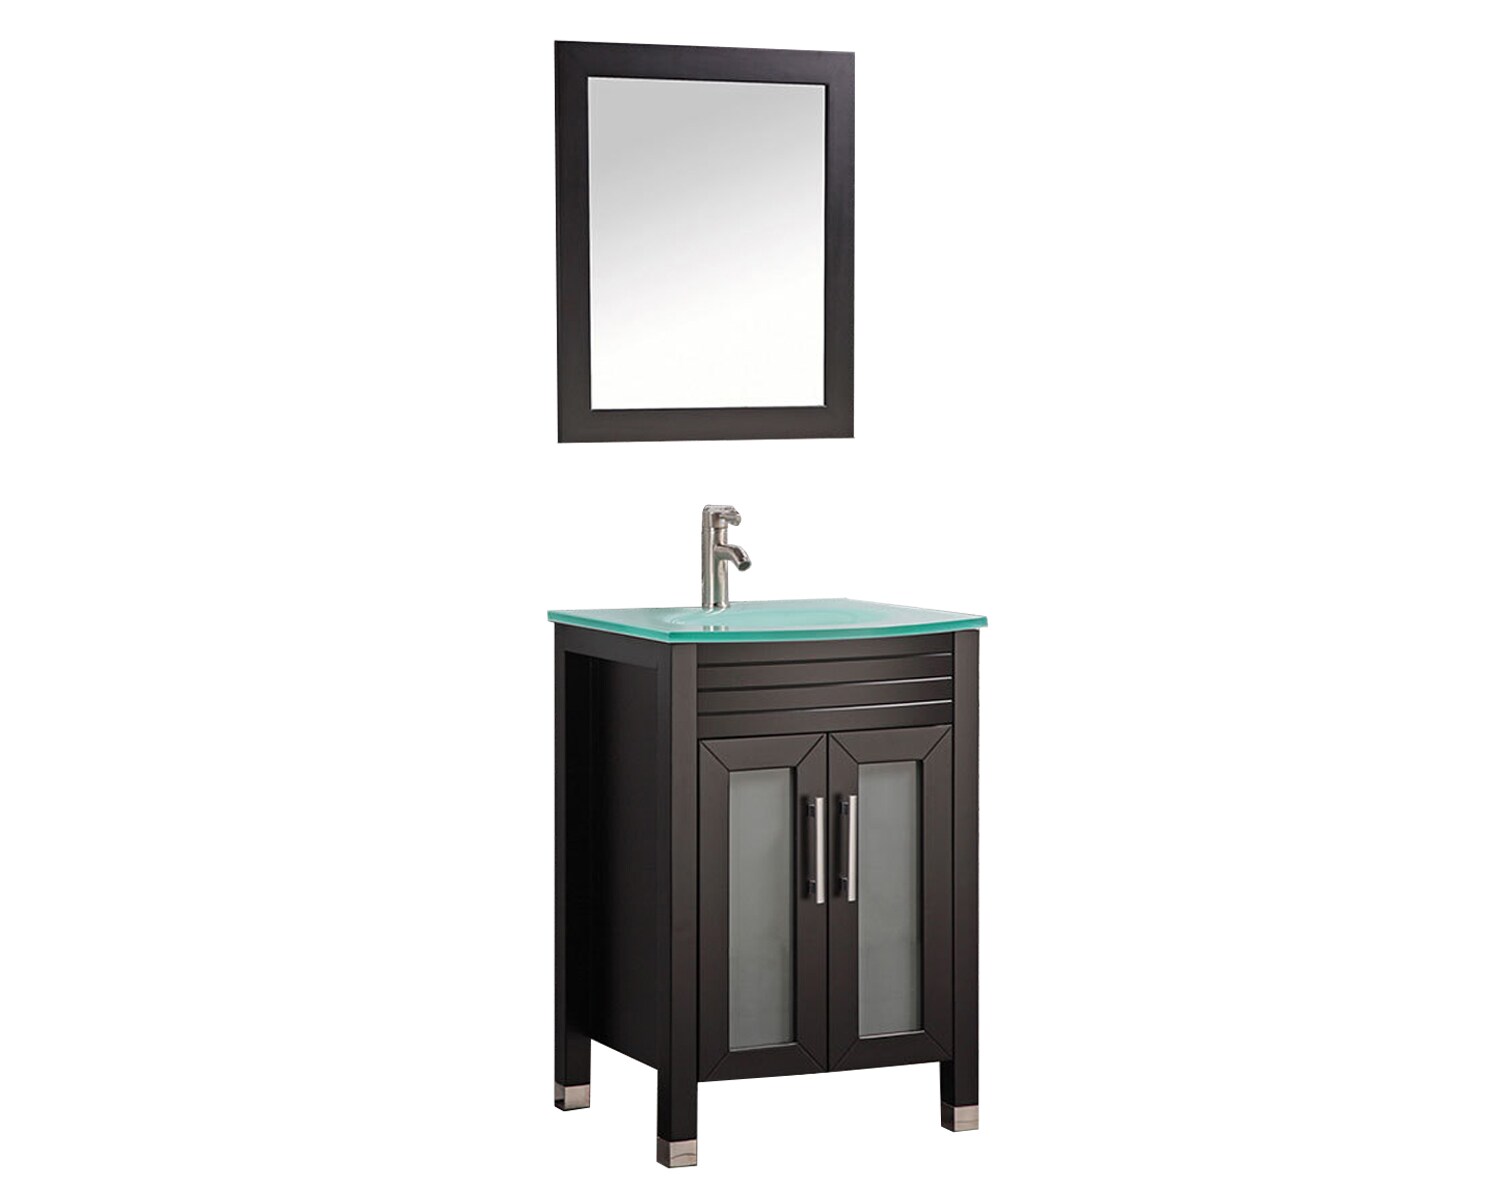 24" Bathroom Vanity Cabinet W/ Mirror Rectangle Ceramic Sink Faucet Combo White 